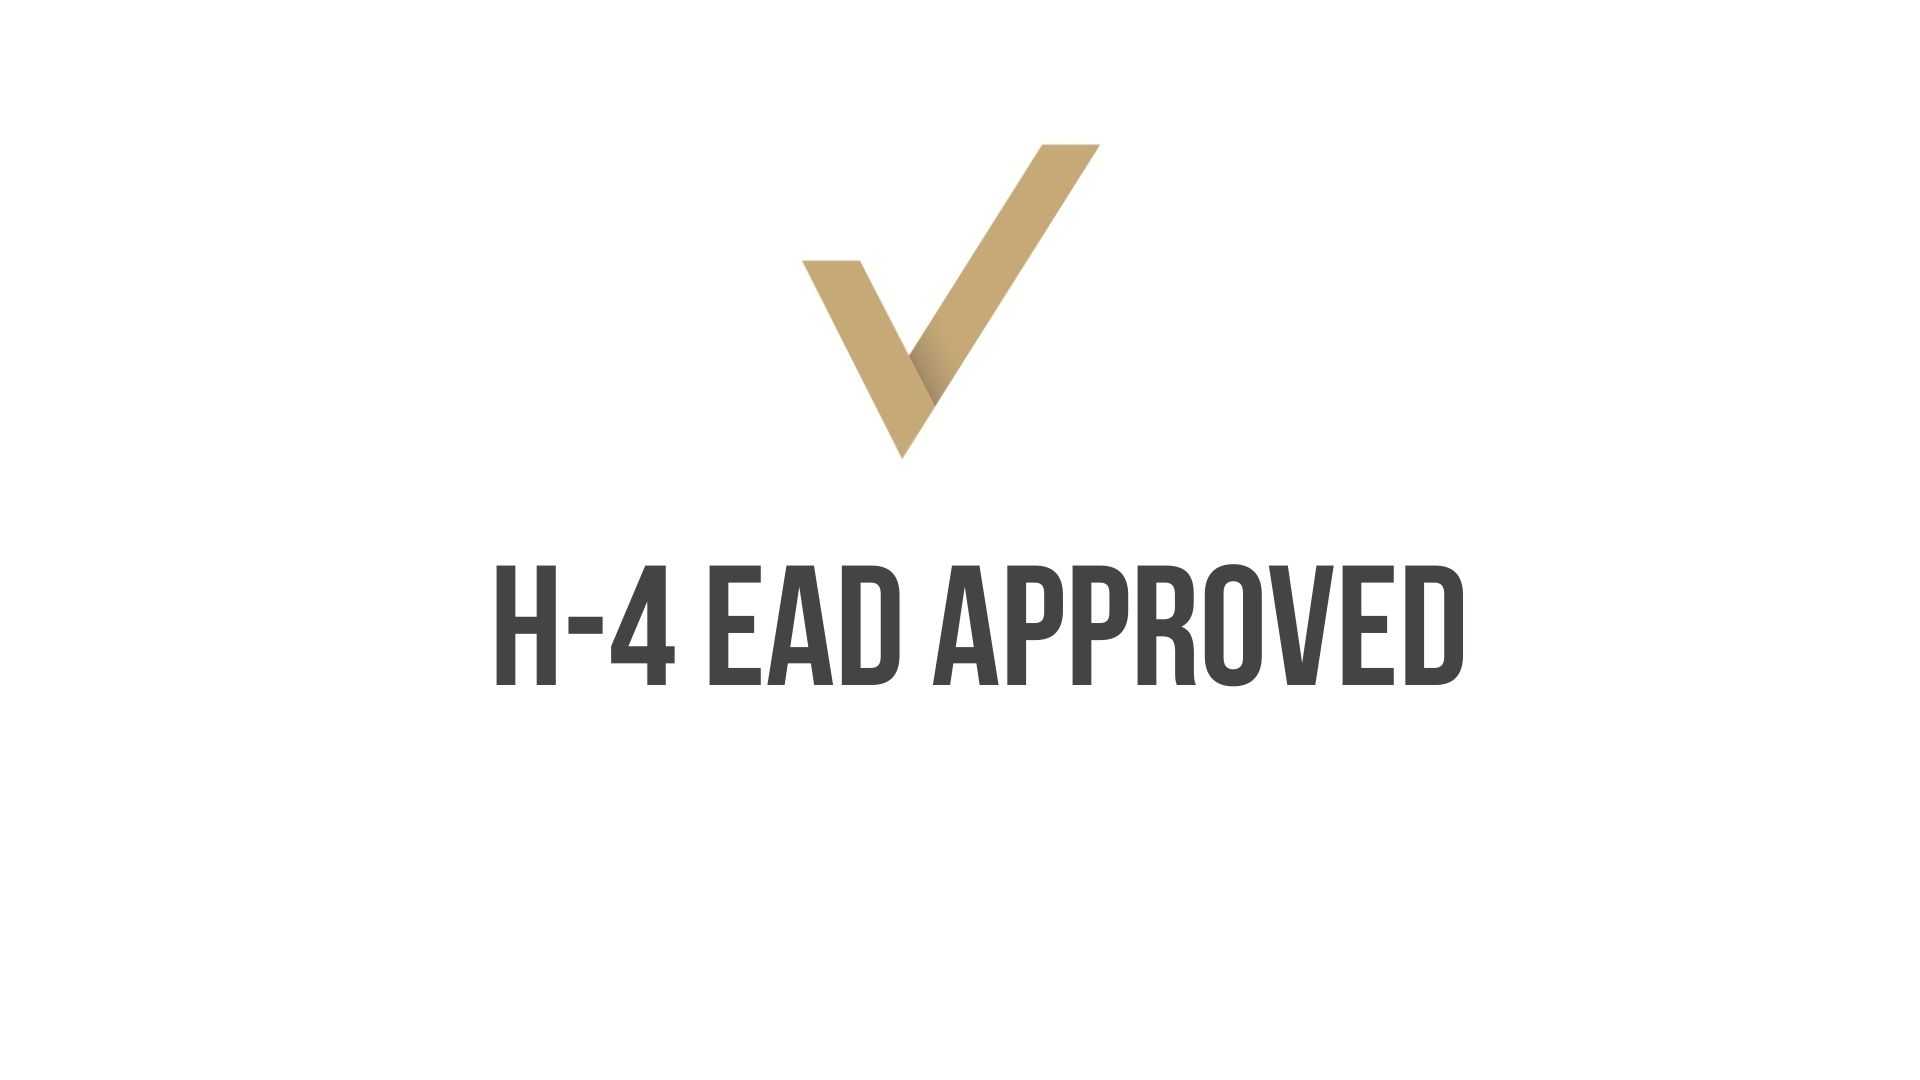 EAD Approval for H-4 Status Holder